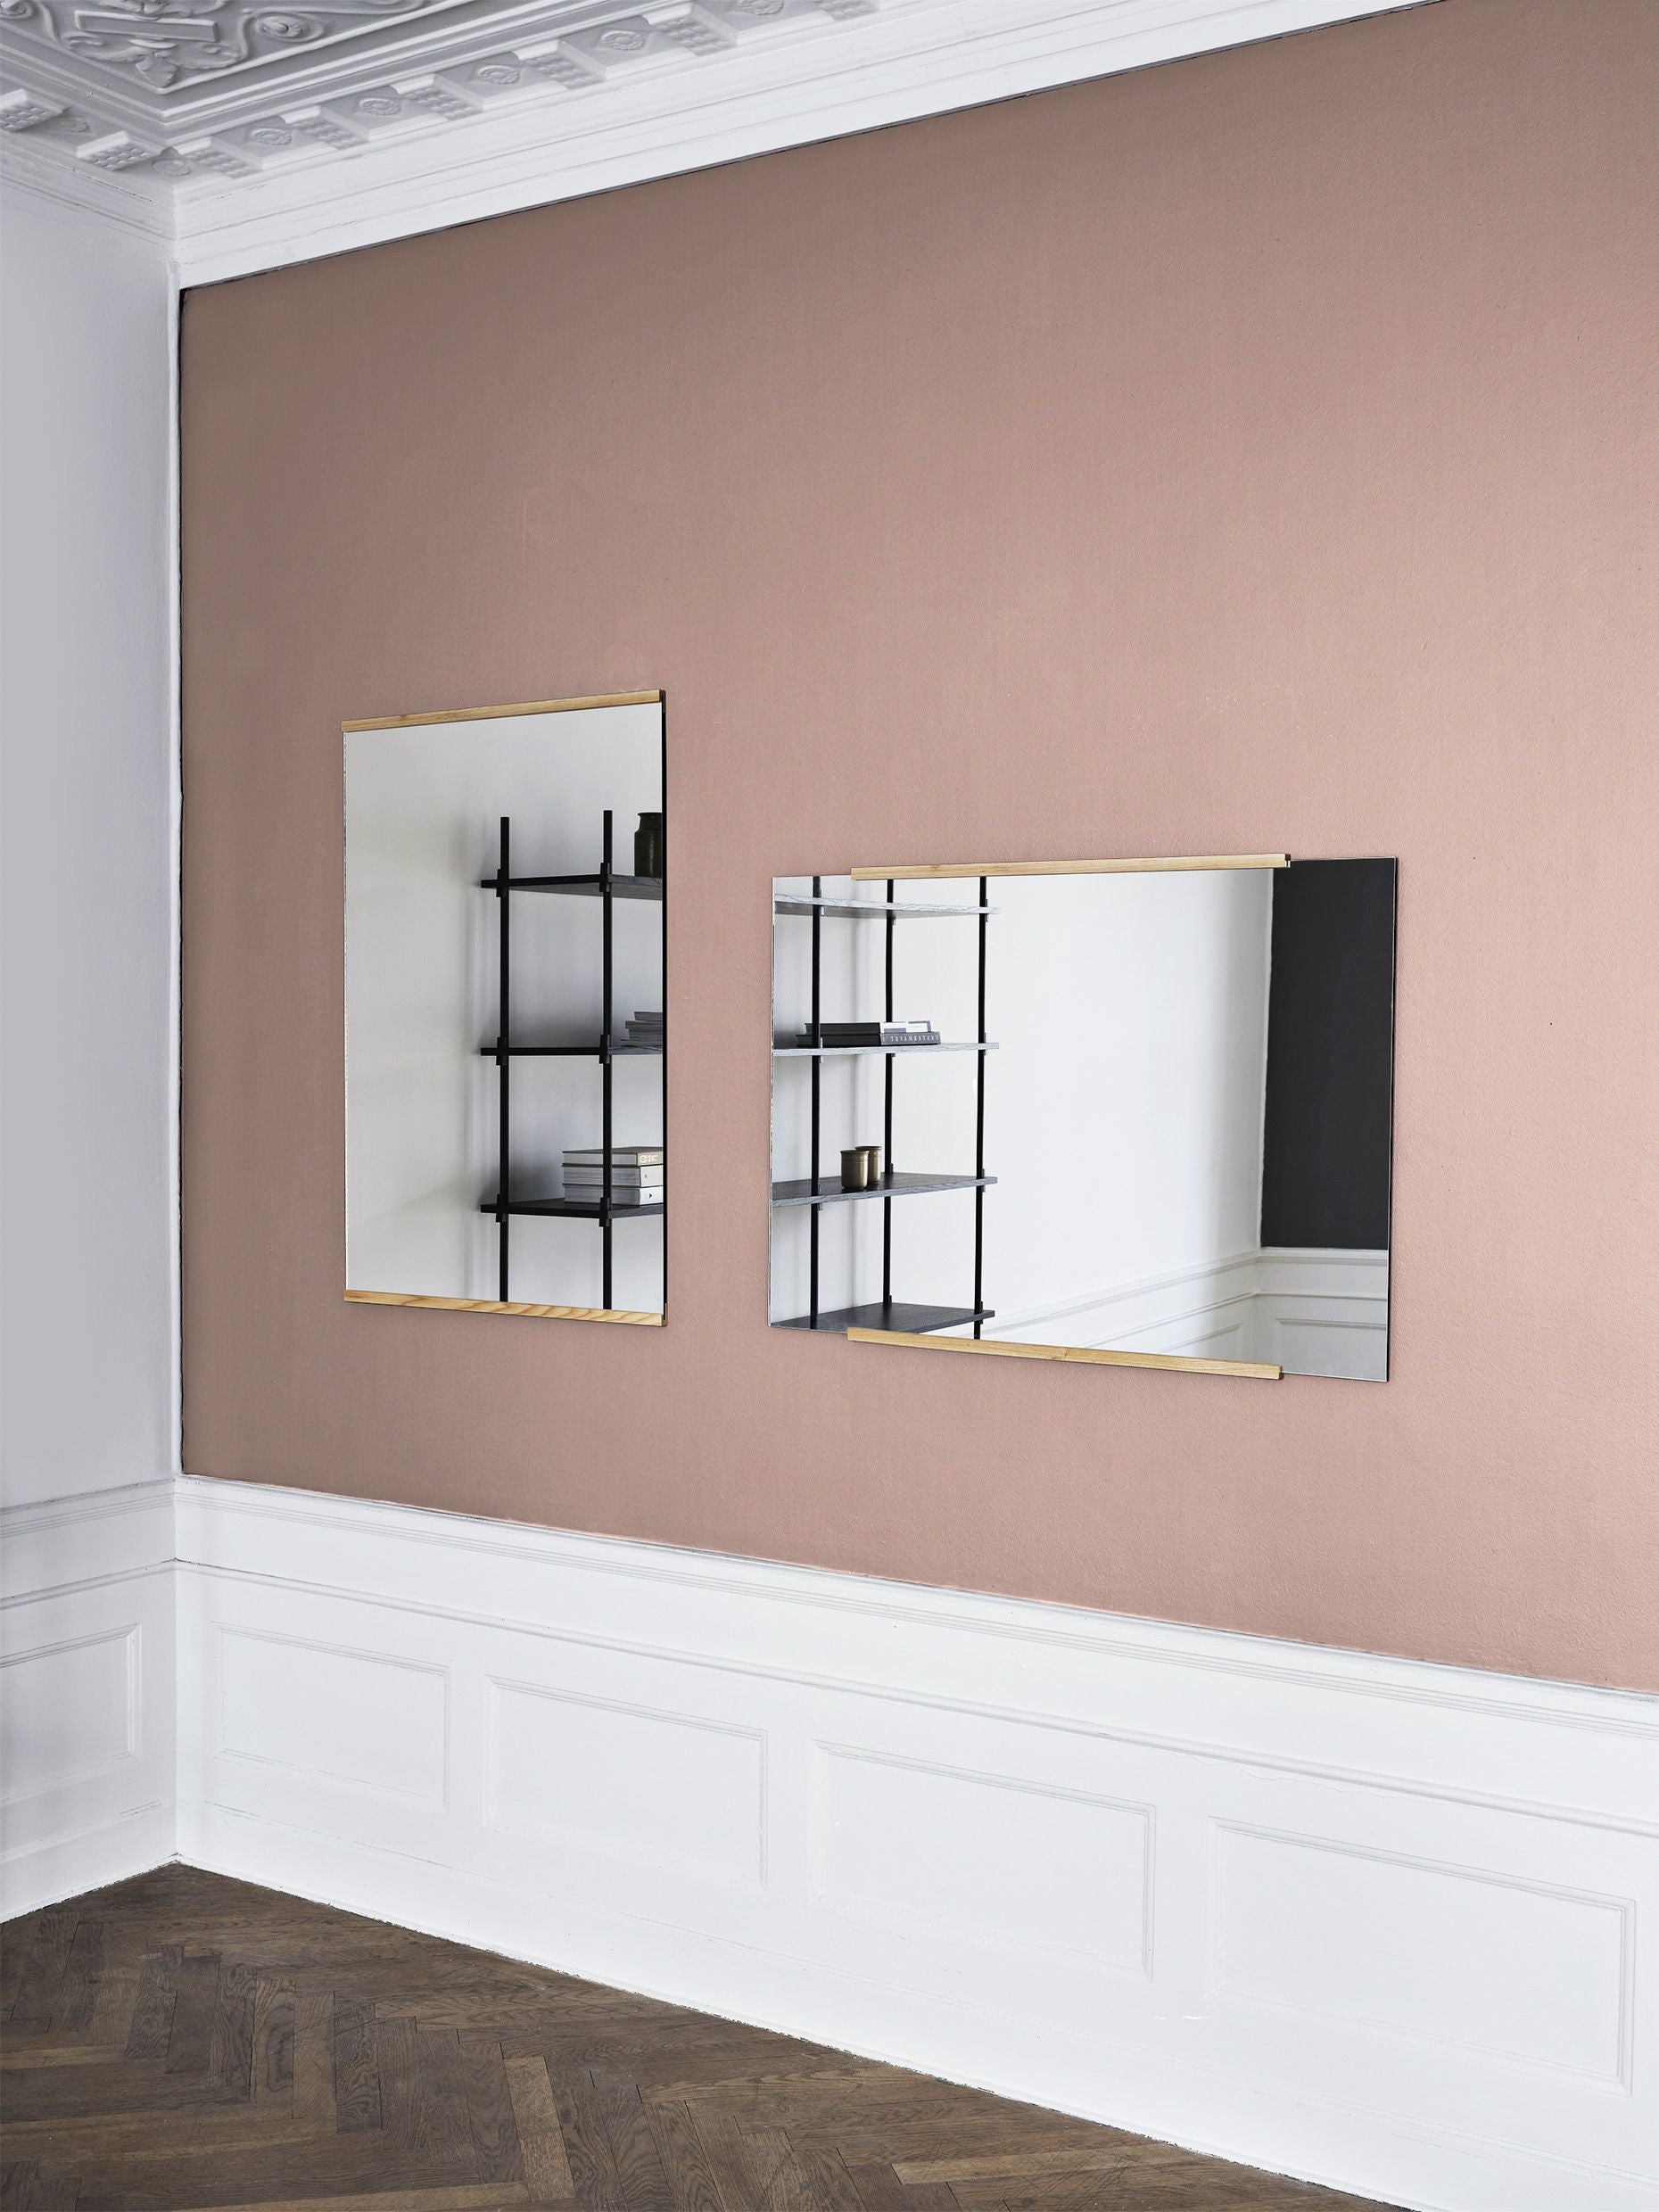 Moebe Rectangular Wall Mirror 43,3x30 Cm, Oak